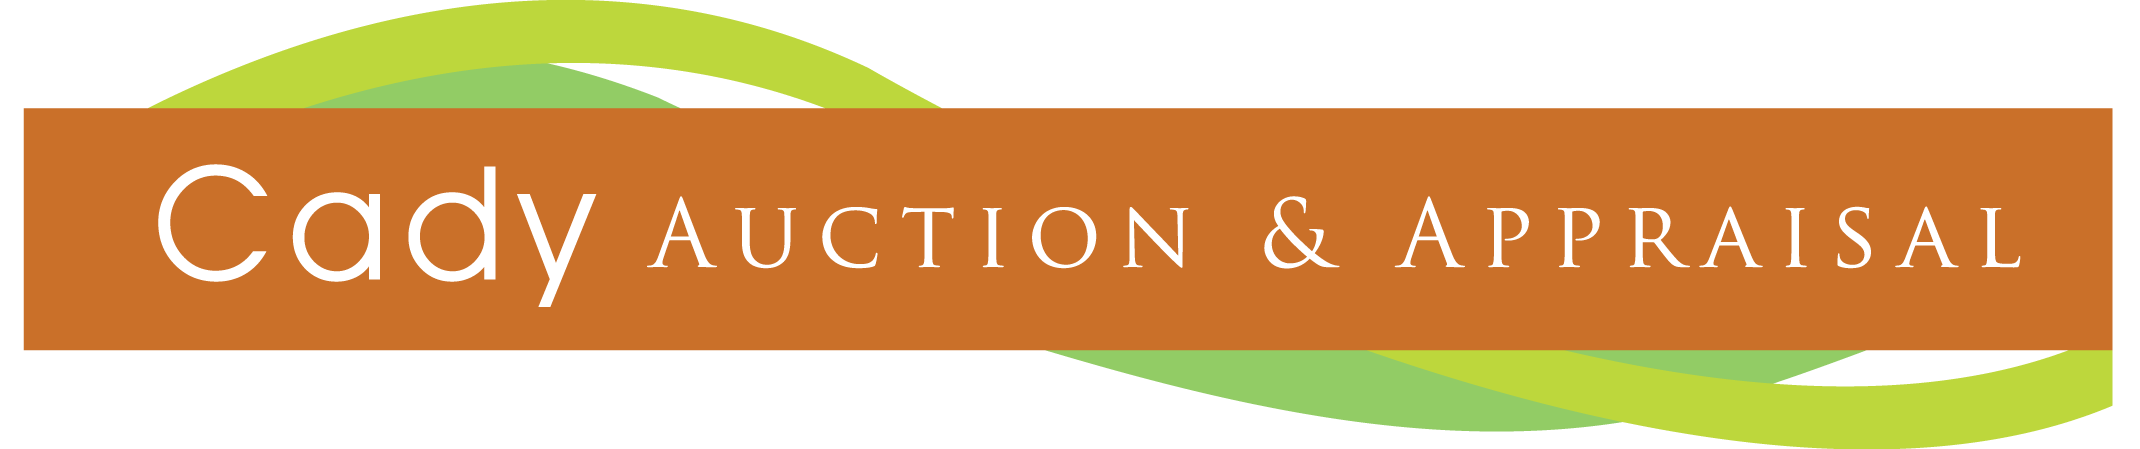 Cady Auction Gallery & Appraisal Logo